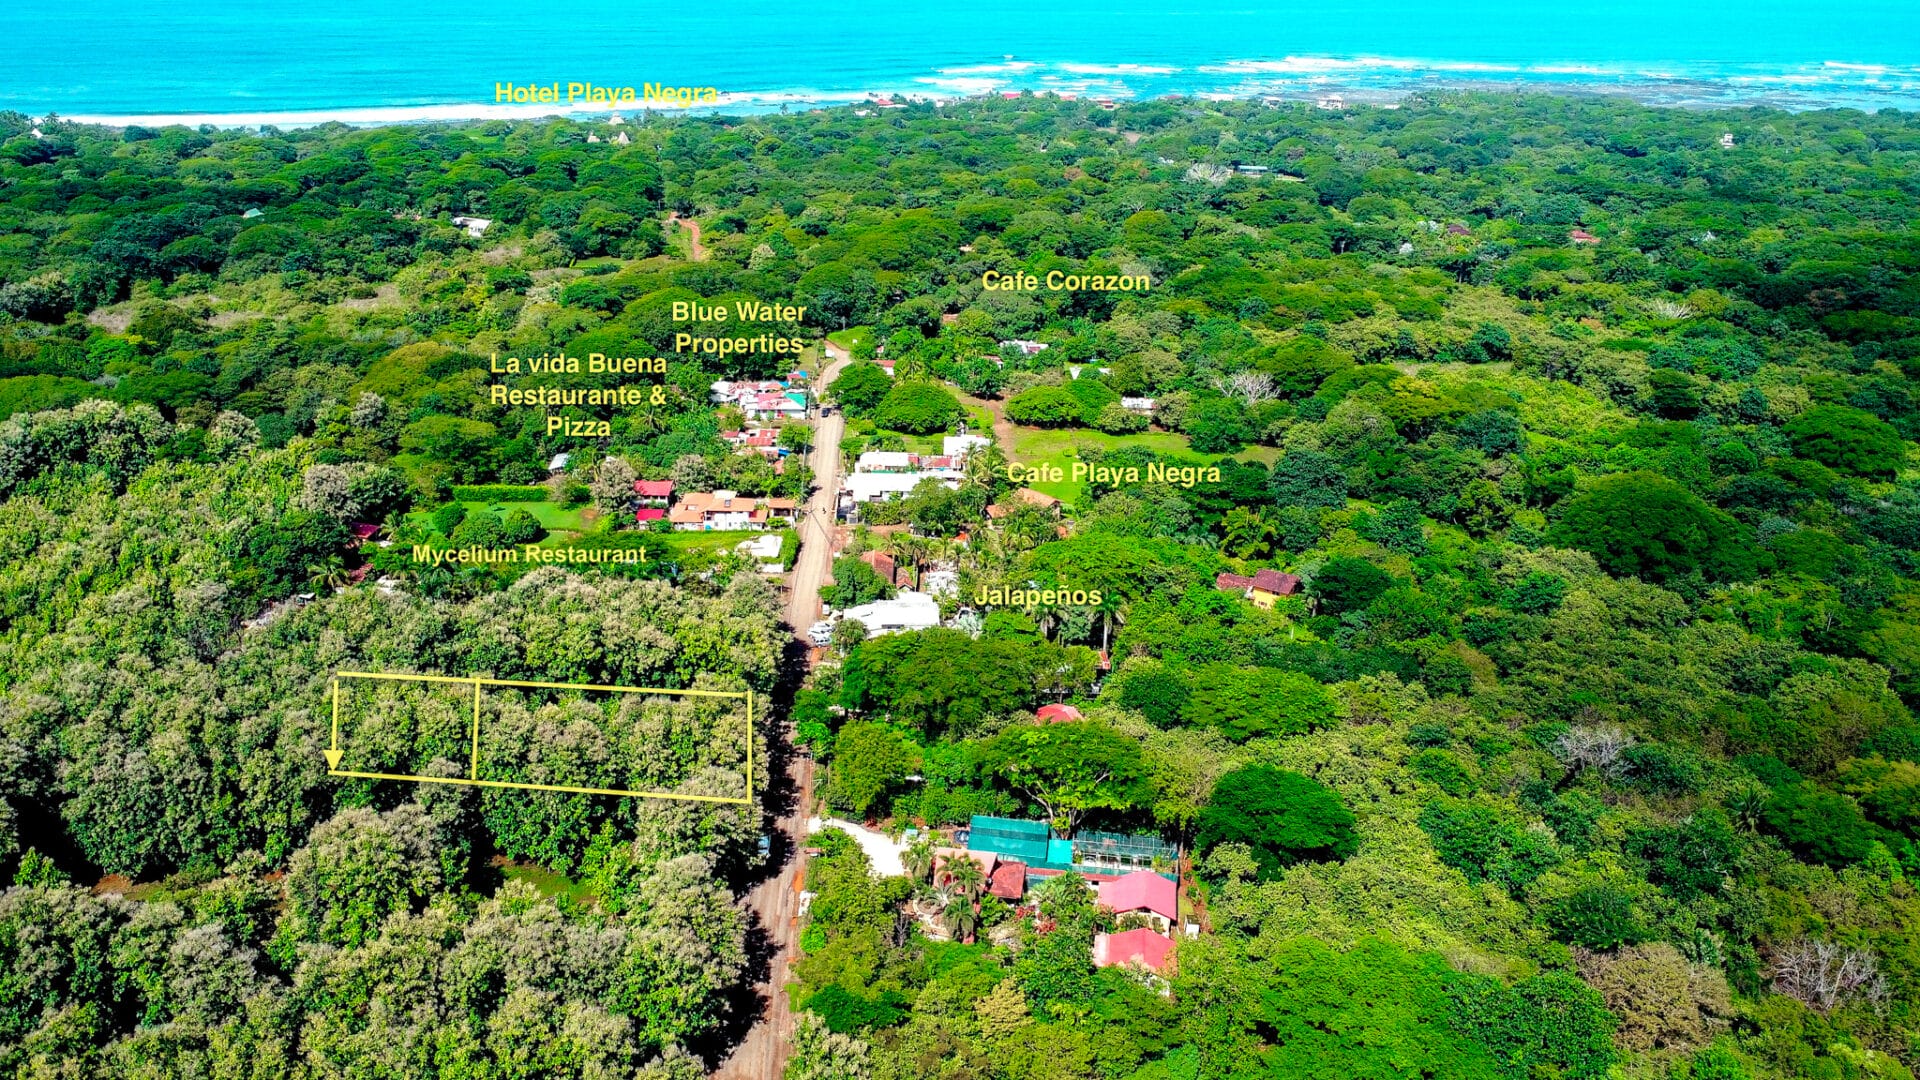 Heart of Playa Negra – Entrepreneur’s Dream Property!